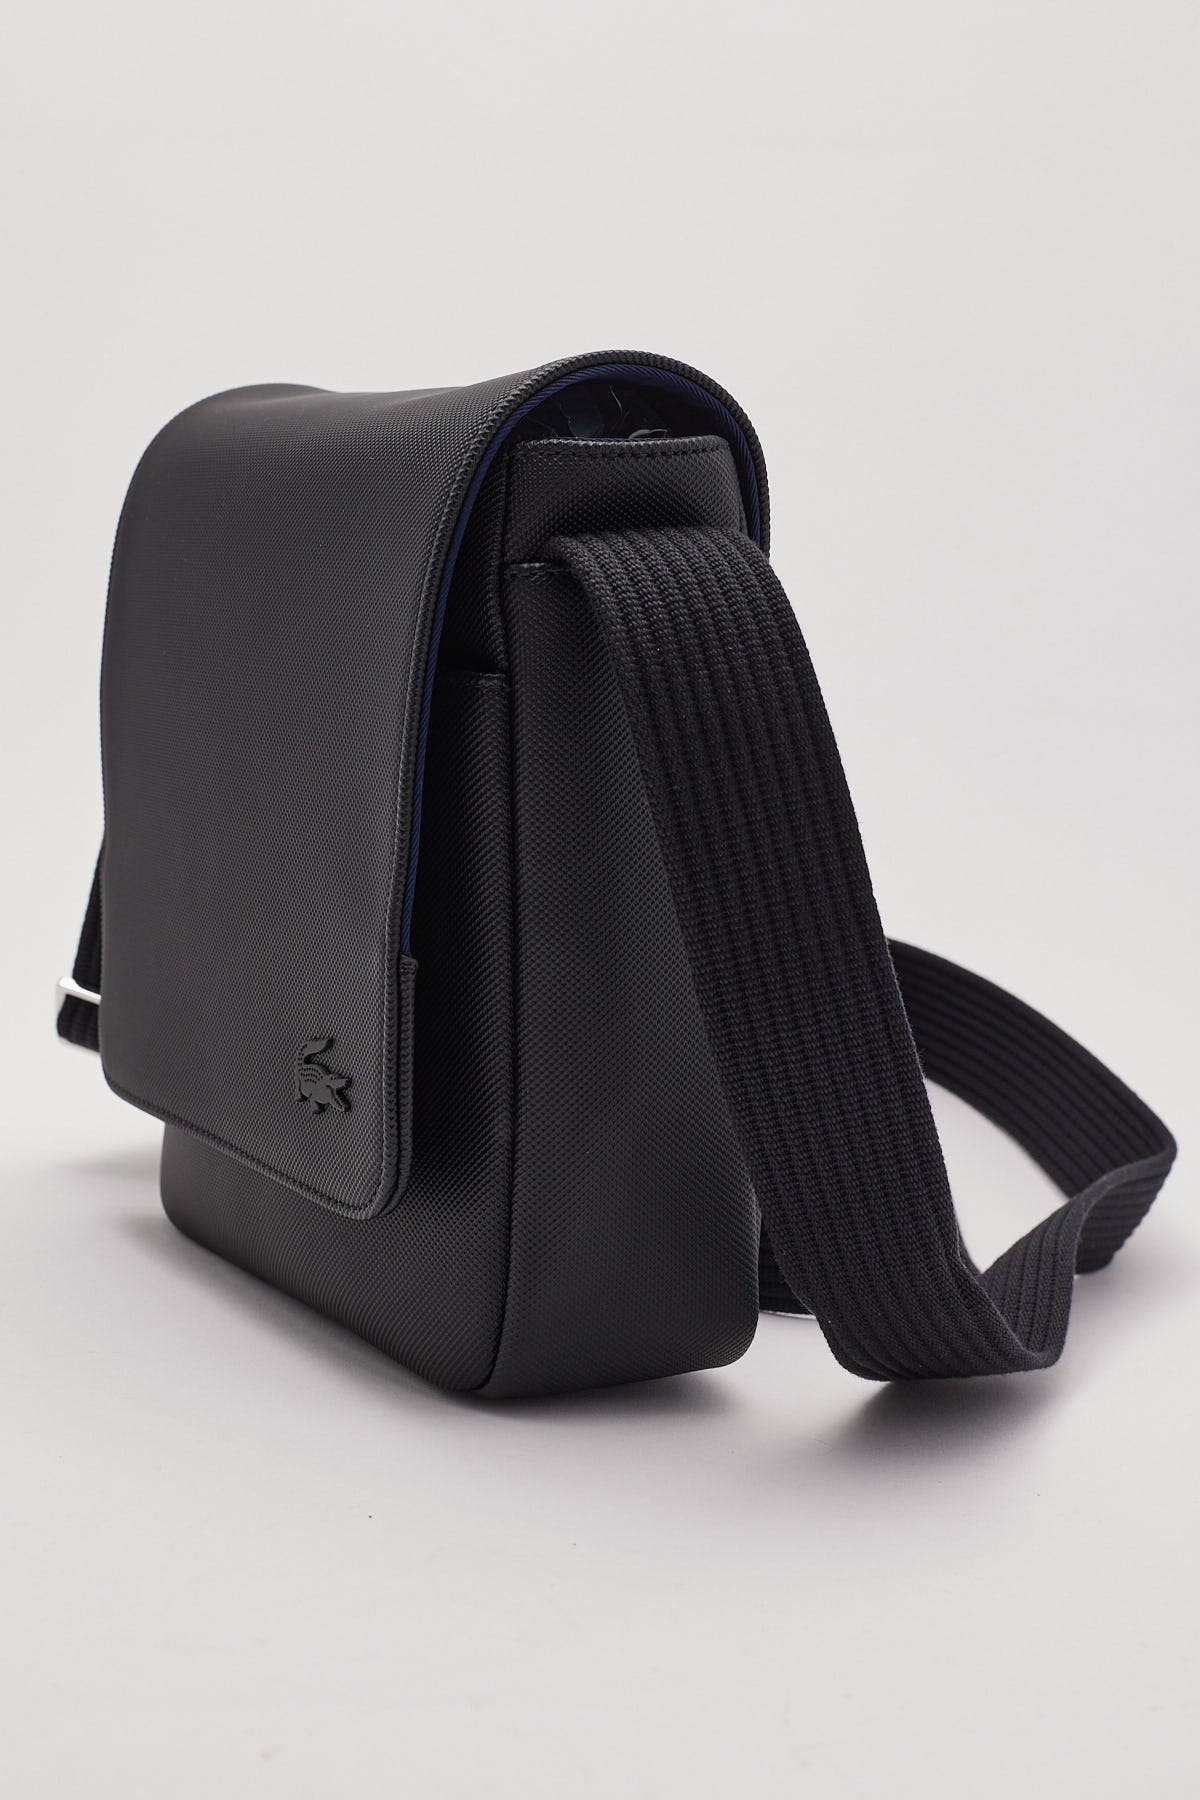 Lacoste Men's Classic Crossover Bag Black – Universal Store